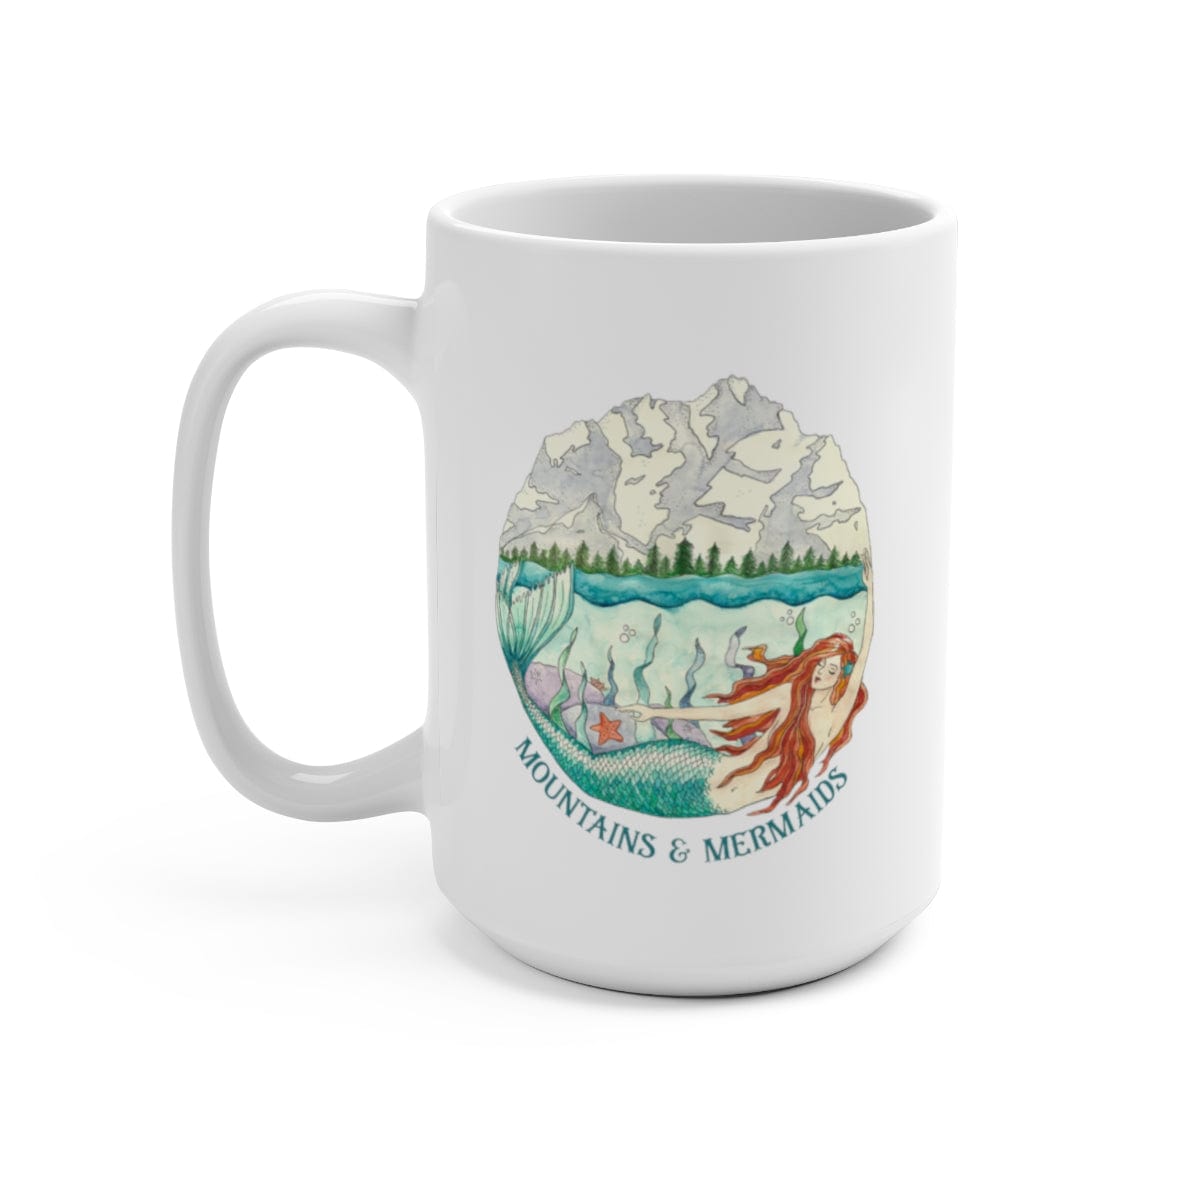 Mountains & Mermaids Coffee Mug 15oz - Mountains & Mermaids